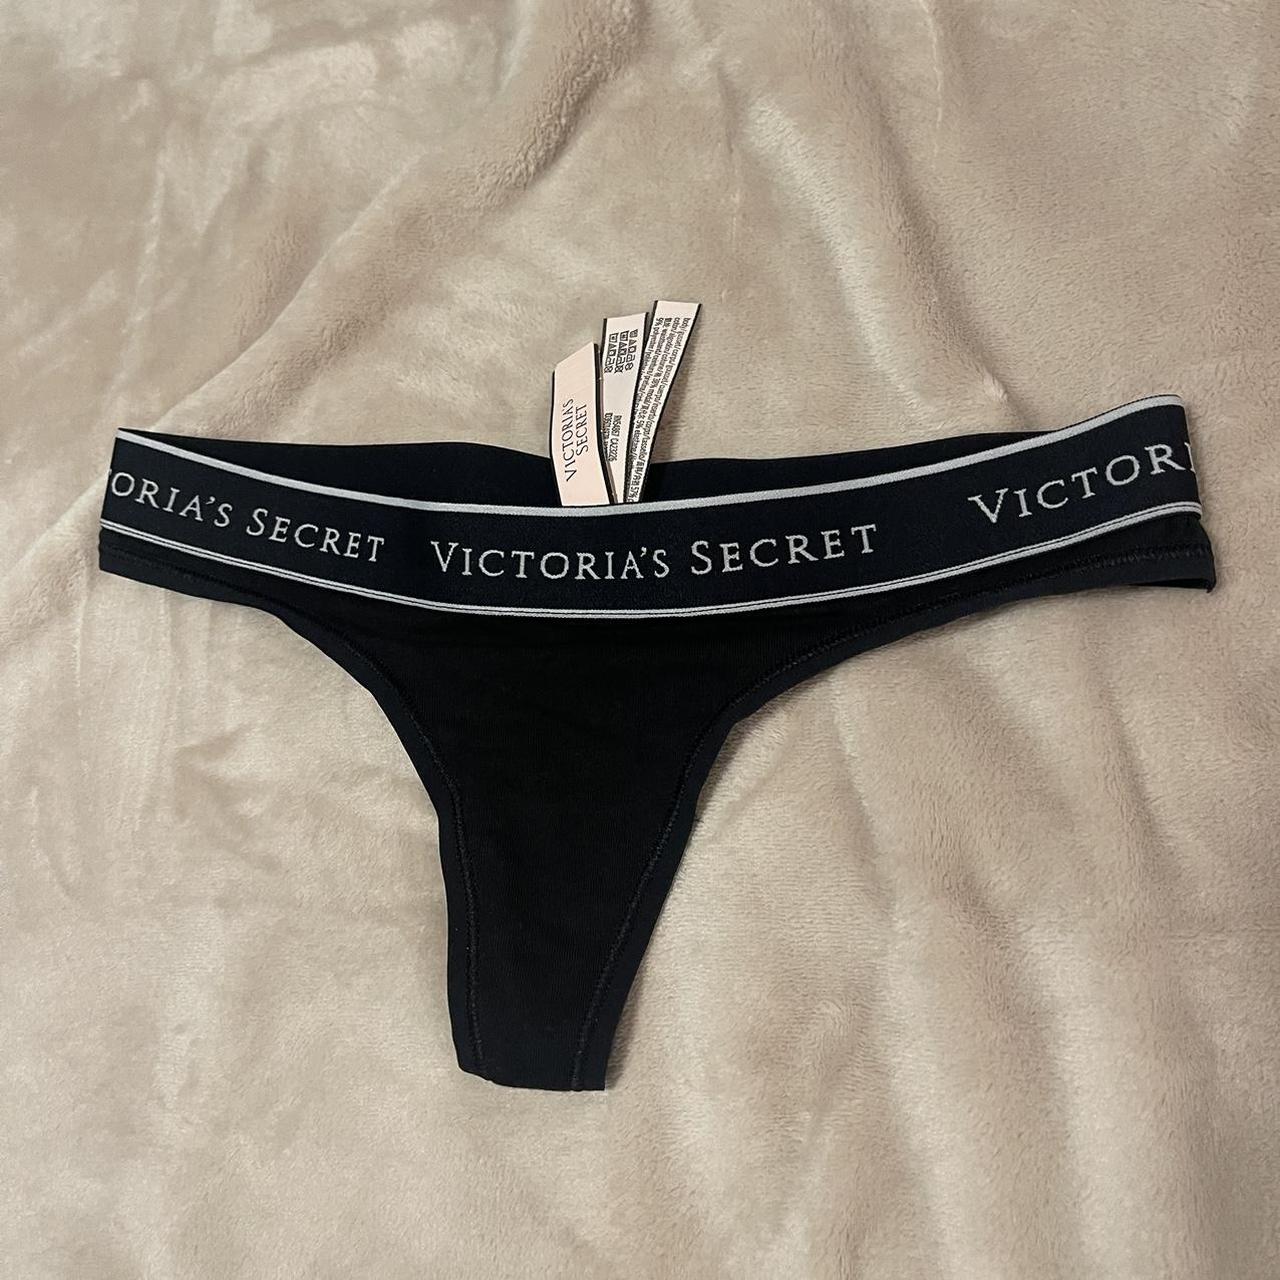 Victoria's Secret Women's Black and White Panties